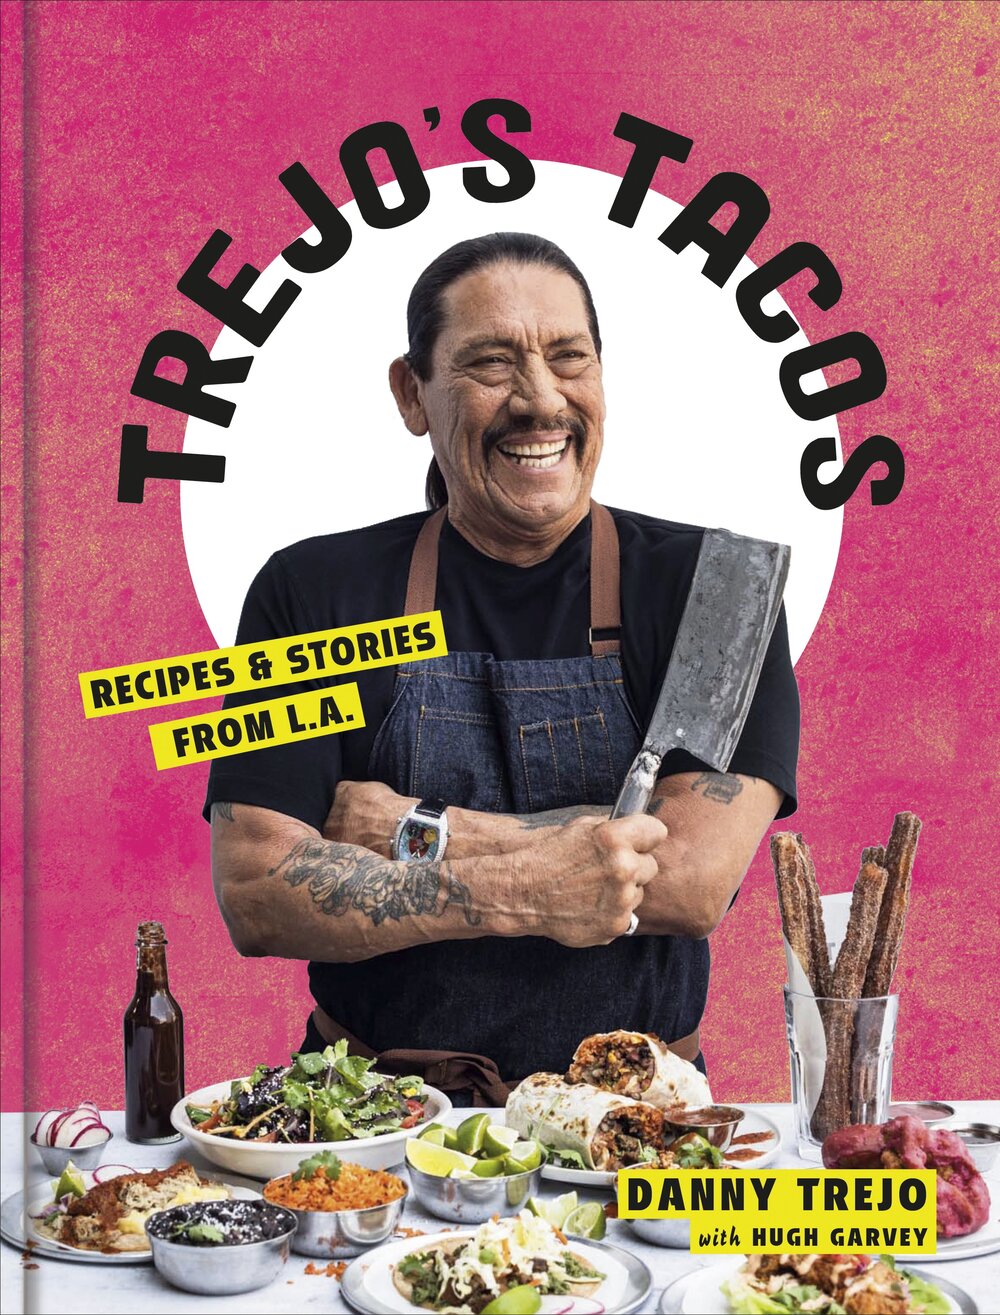 Trejo's Tacos: Recipes & Stories from L.A. by Danny Trejo